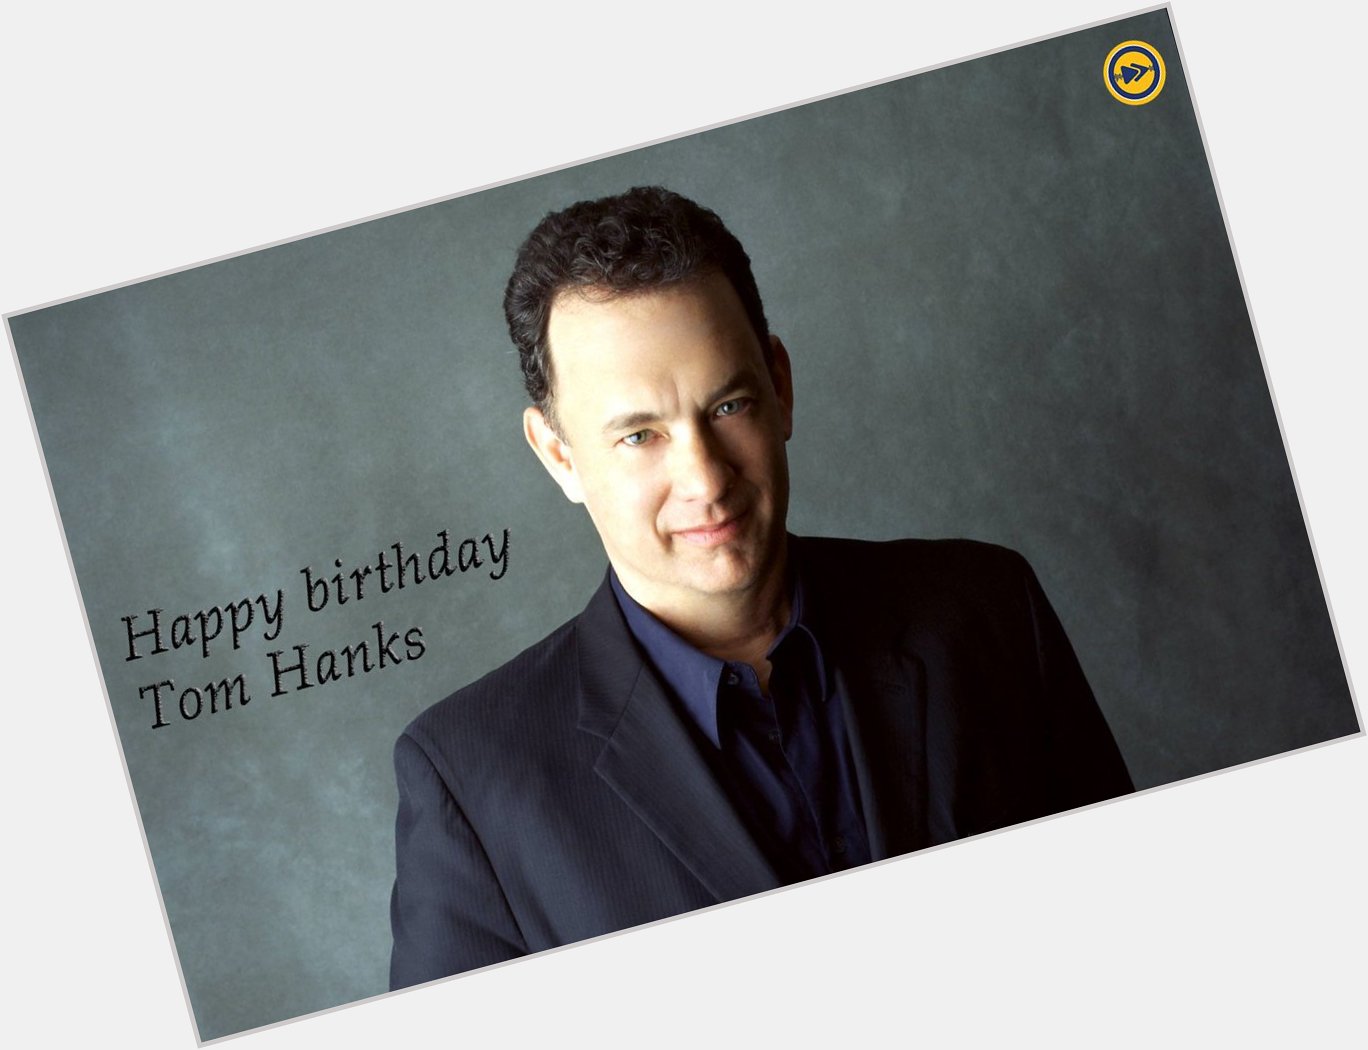 Happy birthday to Hollywood superstar, Tom Hanks!!!  